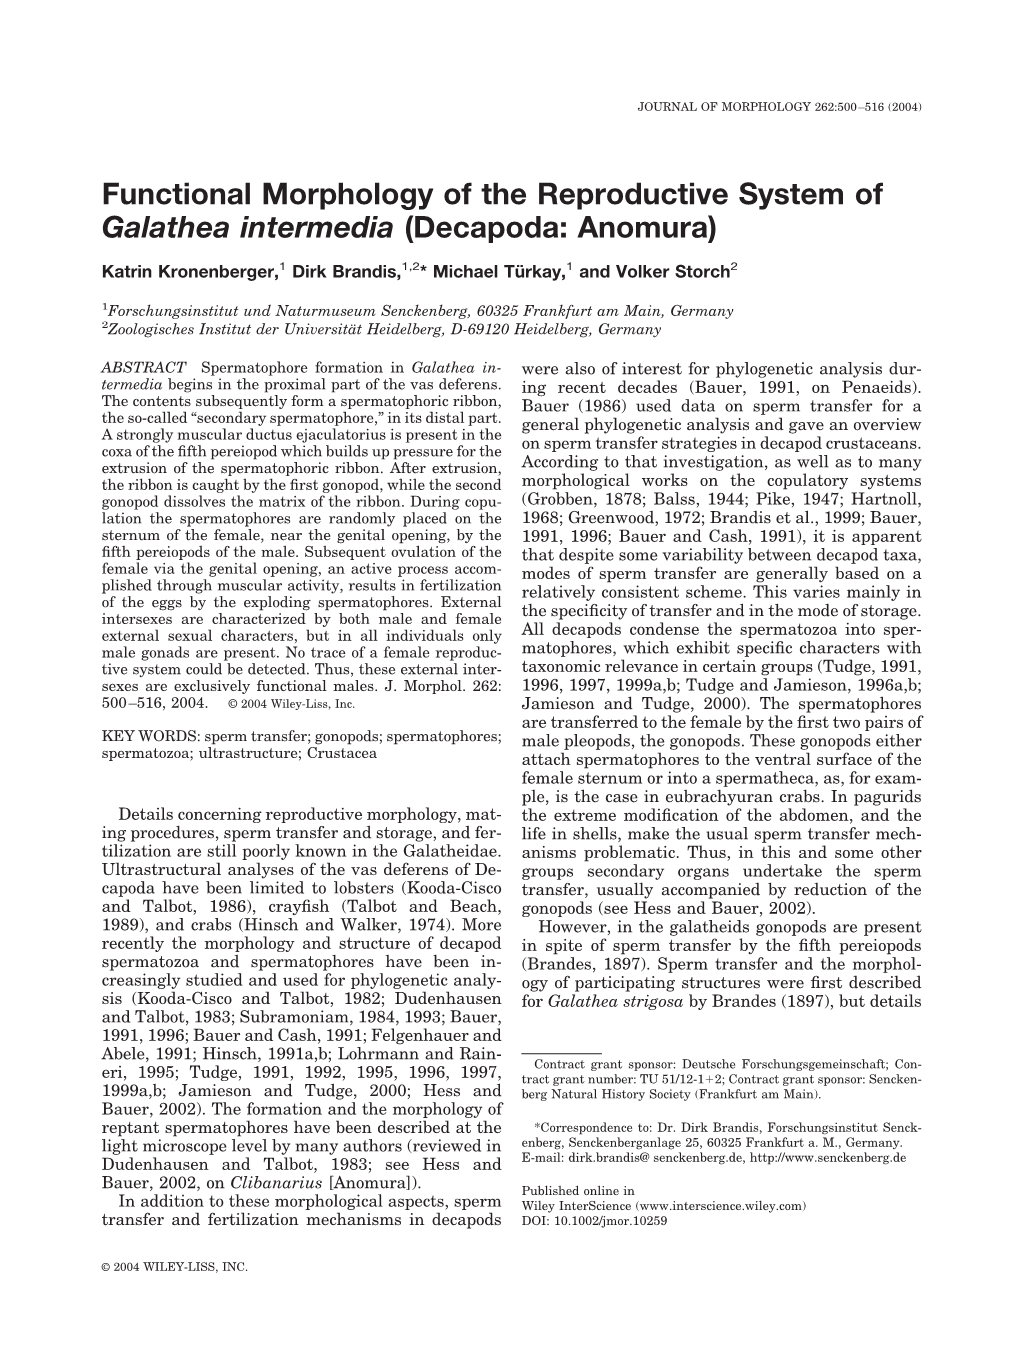 Functional Morphology of the Reproductive System of Galathea Intermedia (Decapoda: Anomura)